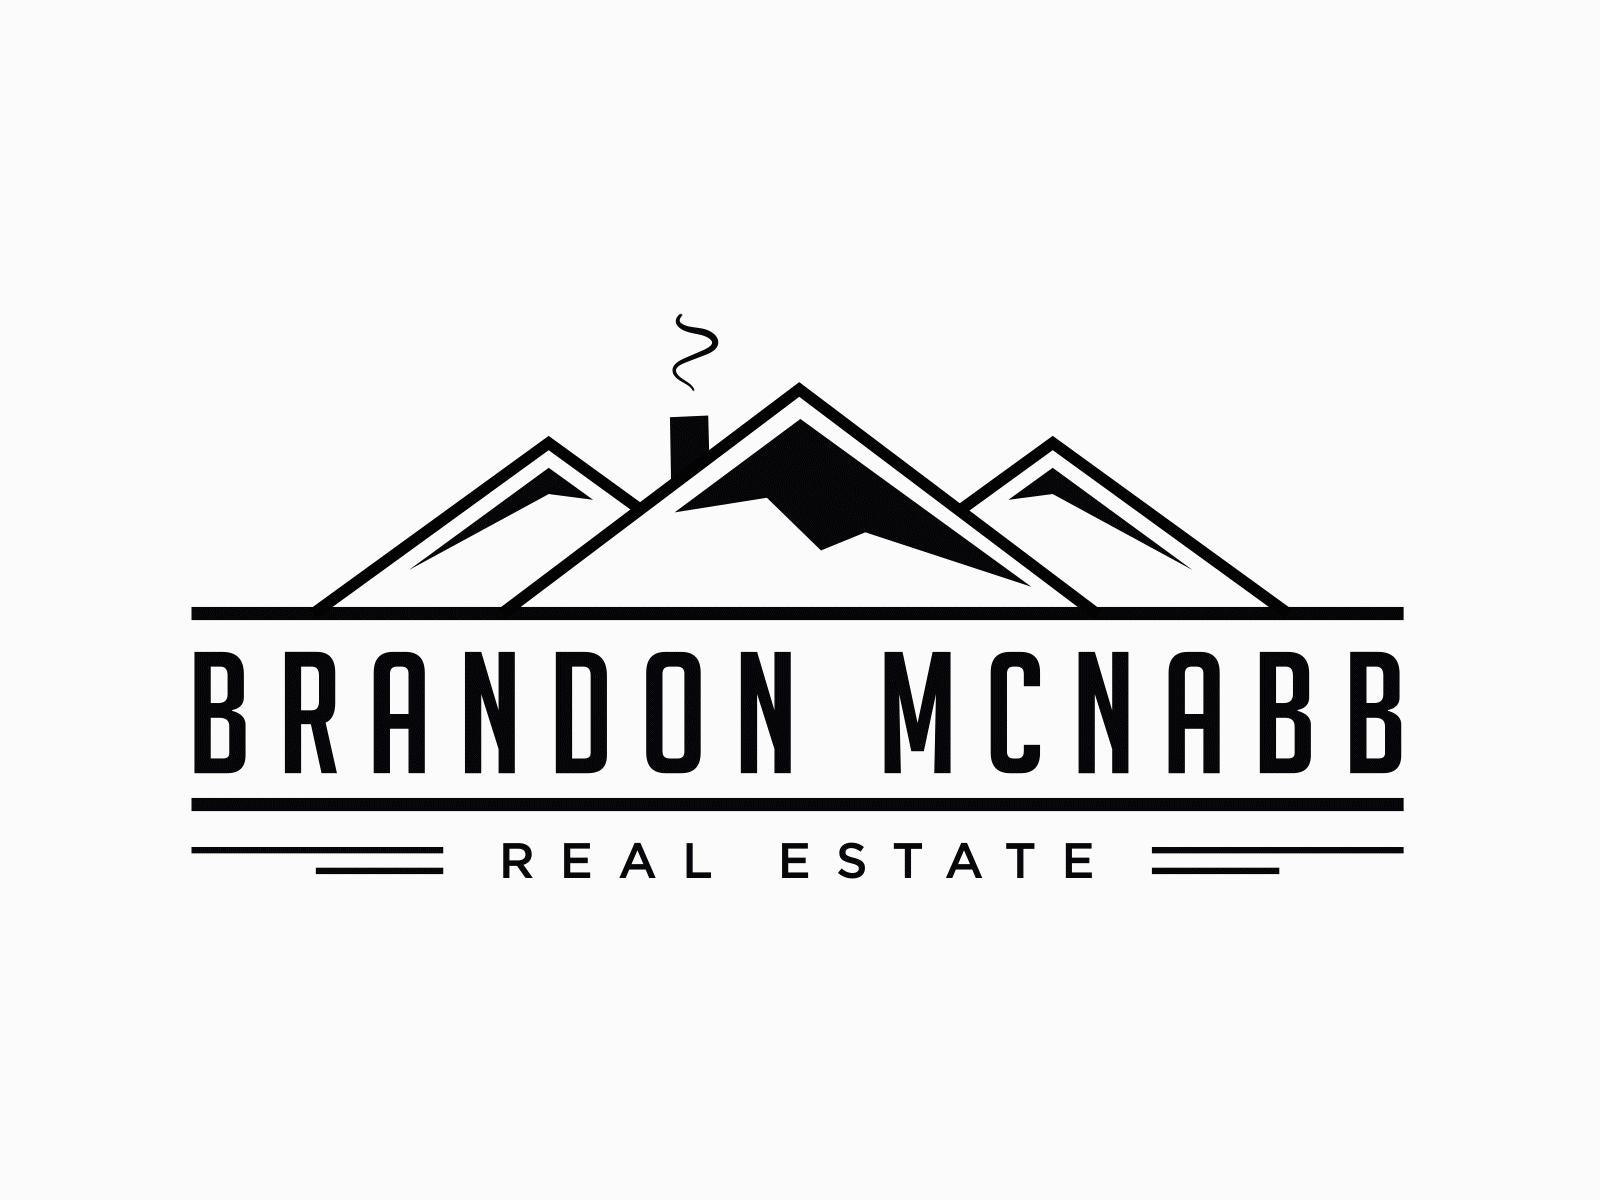 Brandon McNabb Real Estate Logo Animation 2d build up logo animation